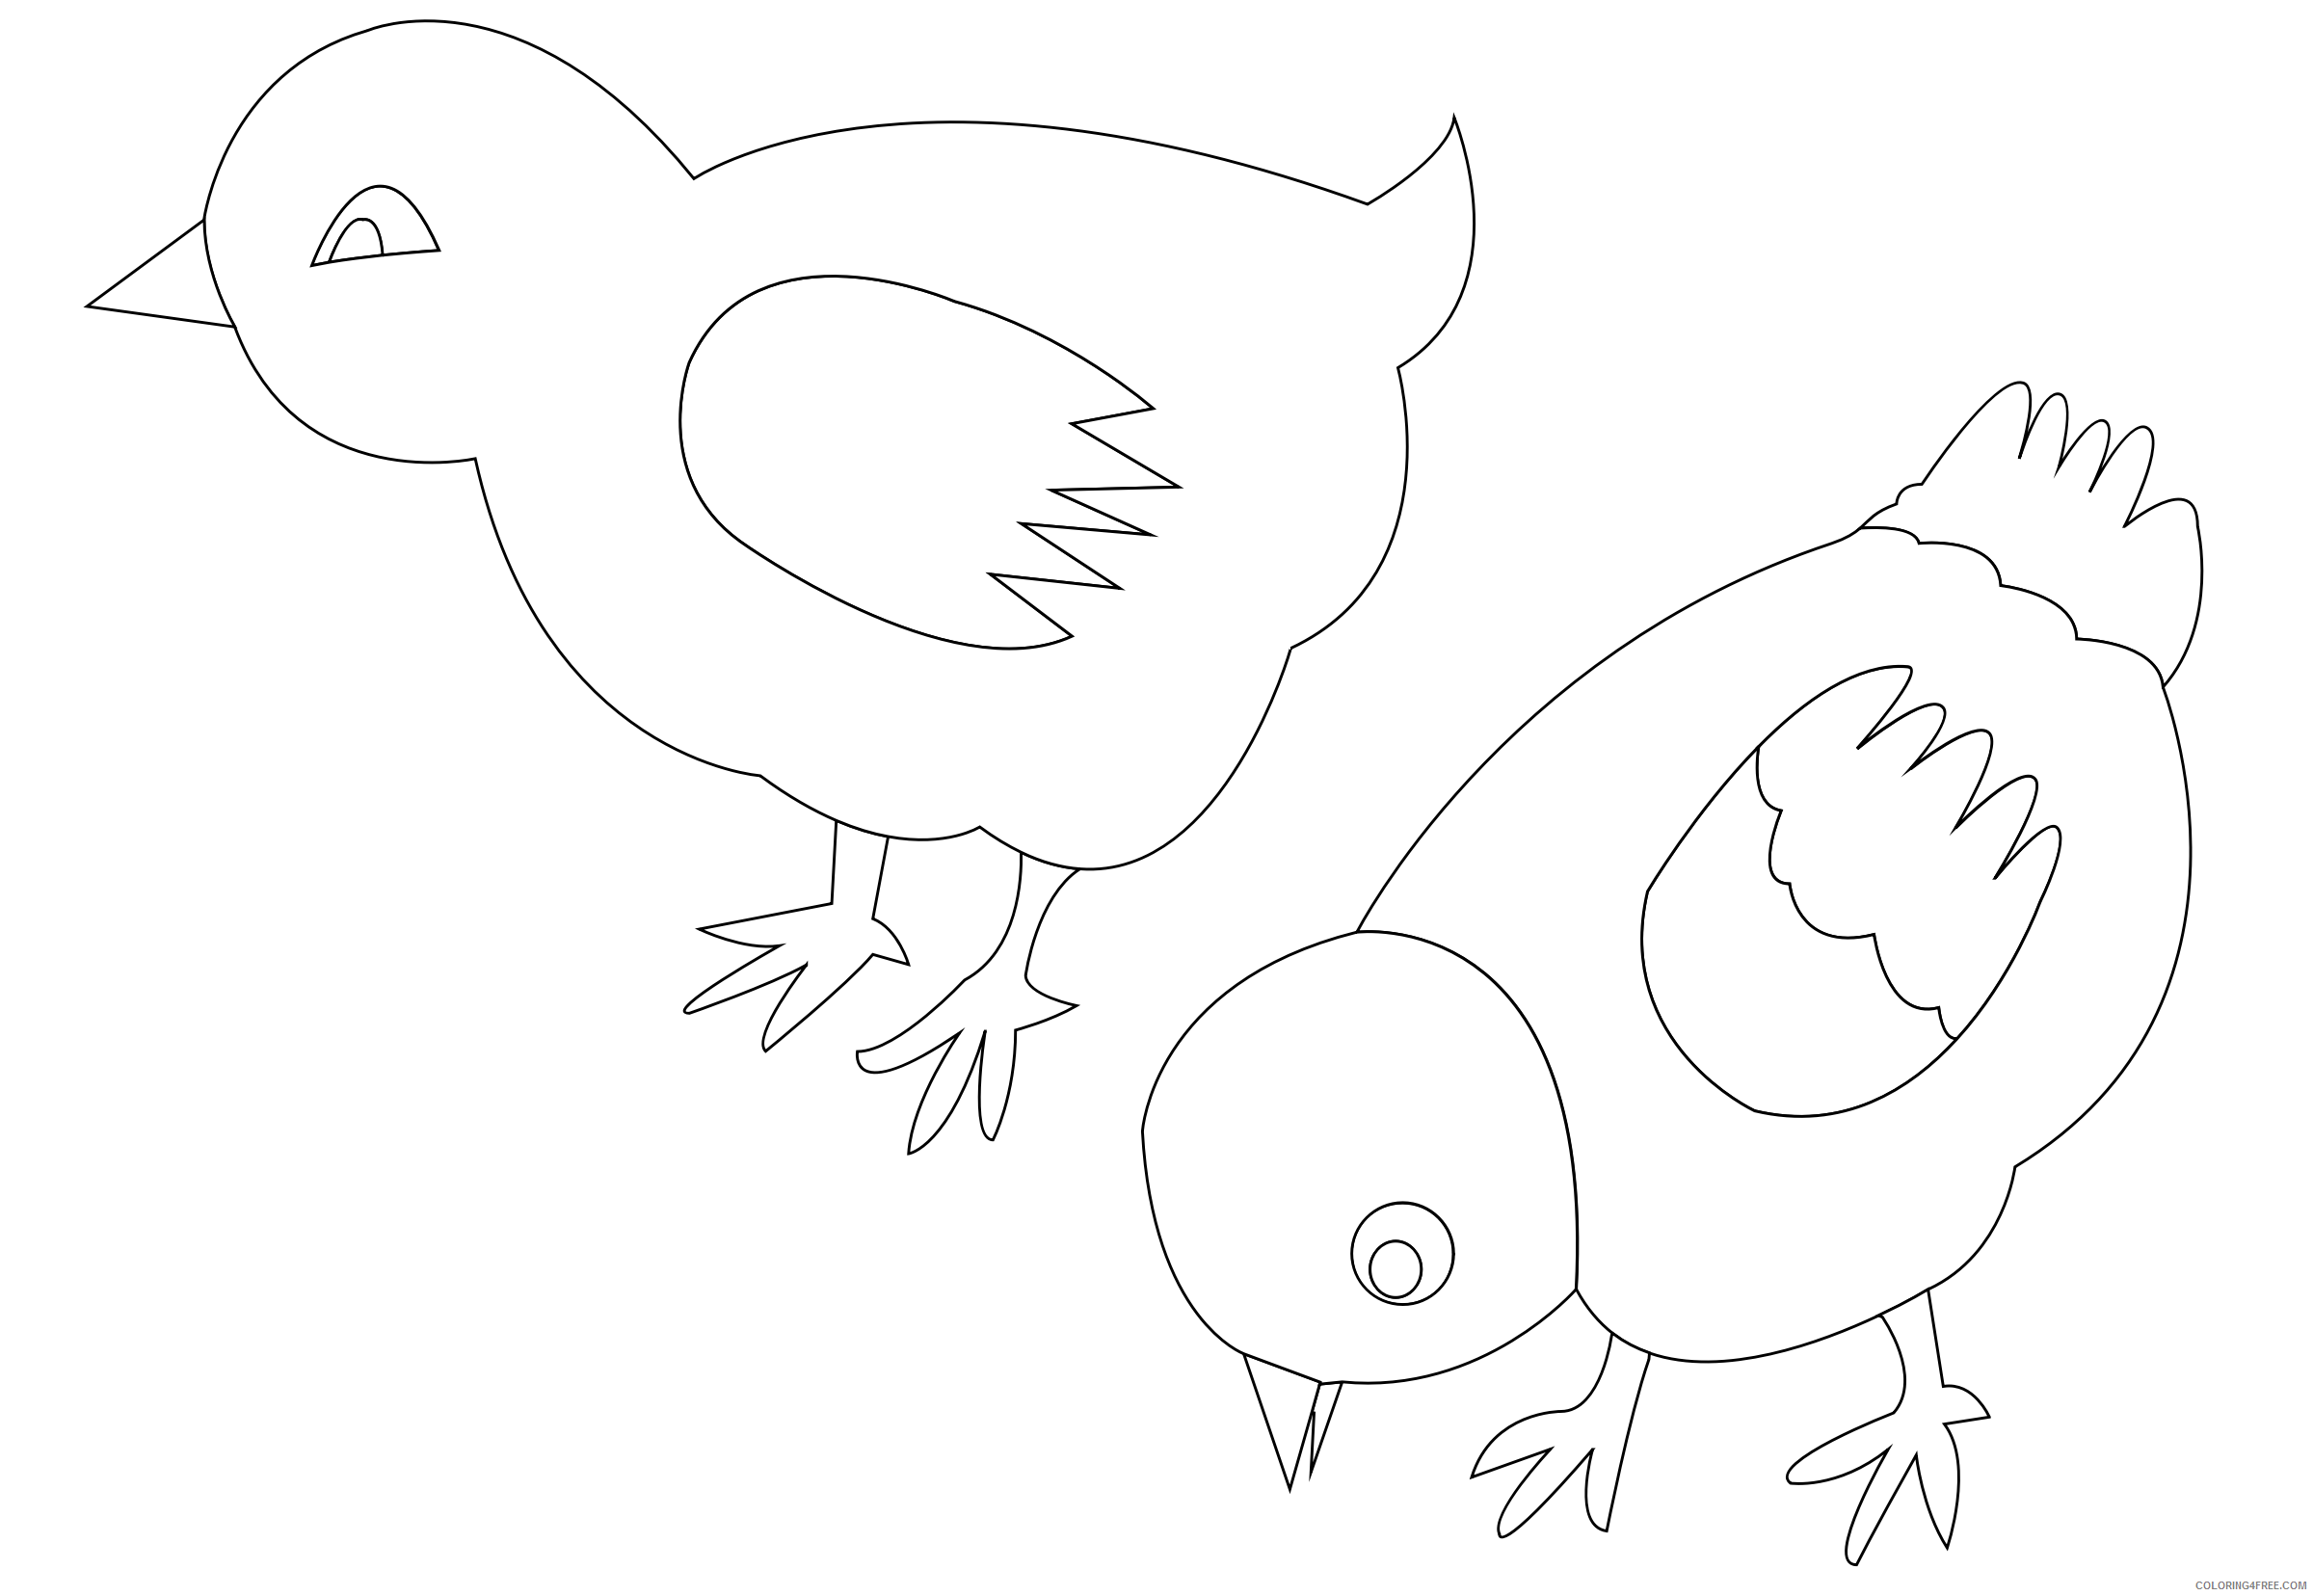 Раскраска 3 цыпленка. Трафареты птиц для рисования. Цыпленок. Раскраски. Трафареты птиц для рисования для детей. Трафарет цыпленка для рисования.